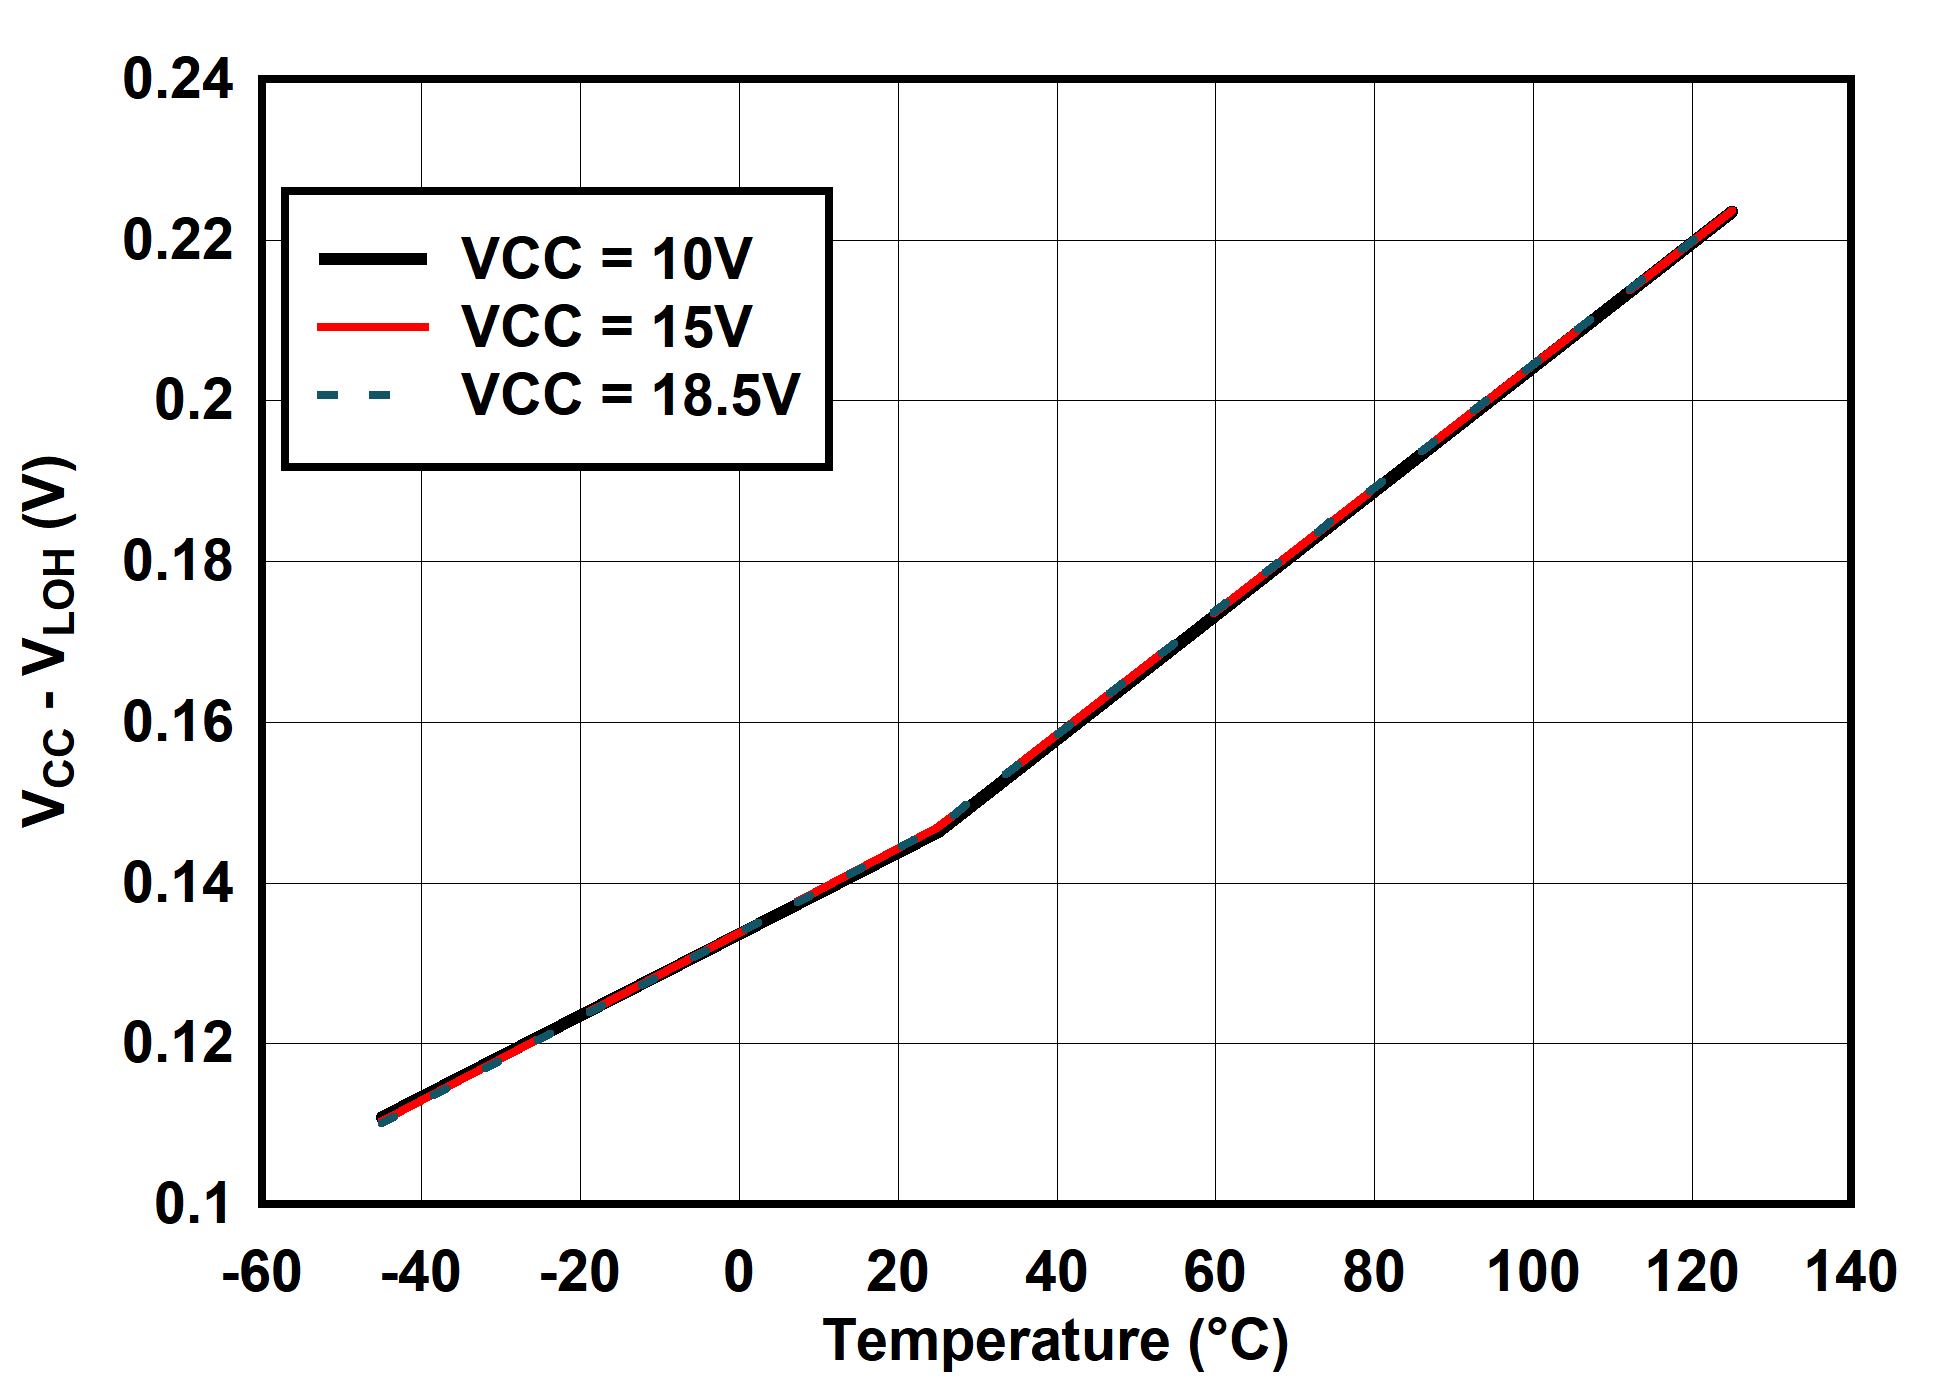 UCC25660 (VCC- VLOH) vs Temperature